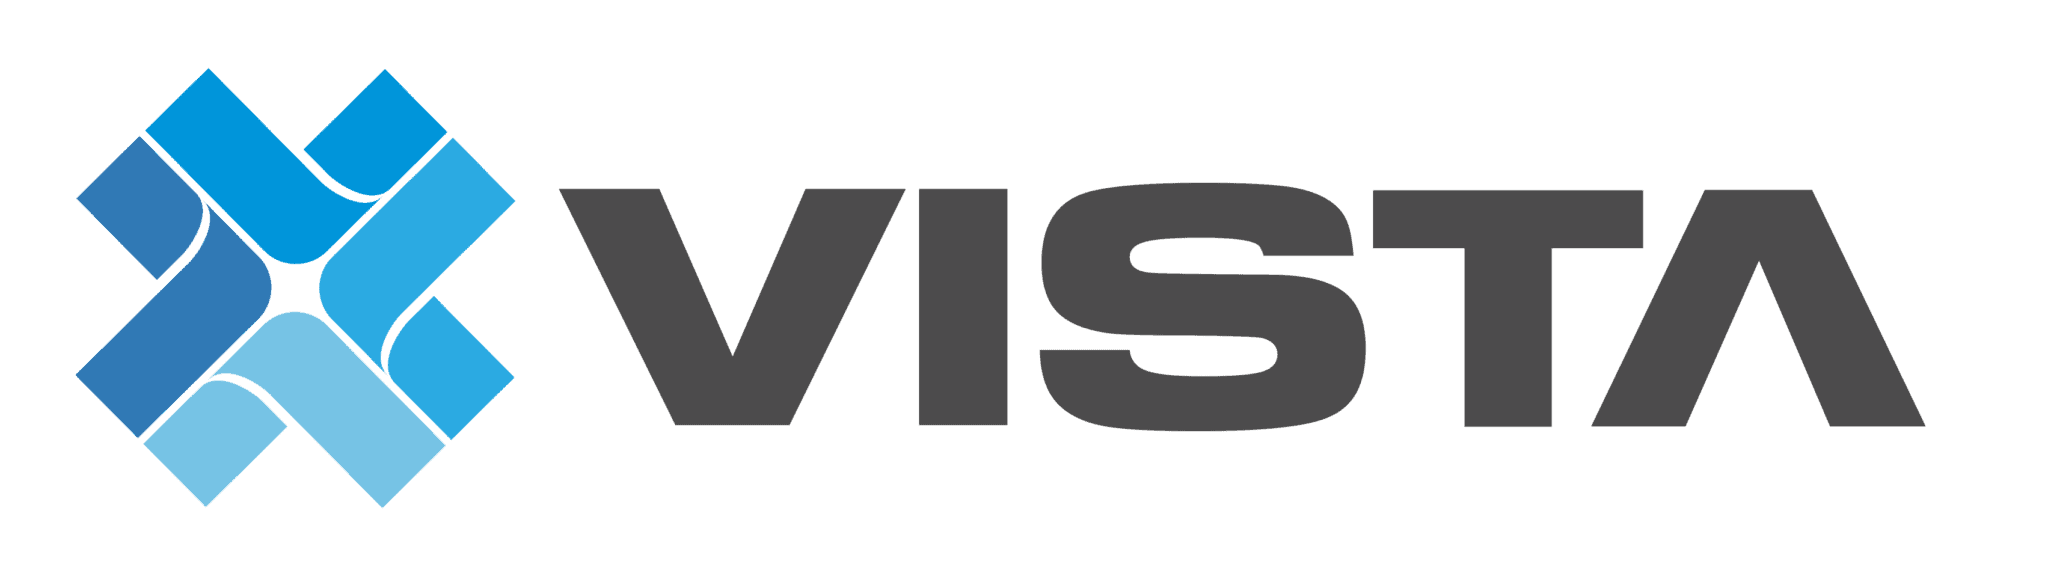 Sign up for Vista News